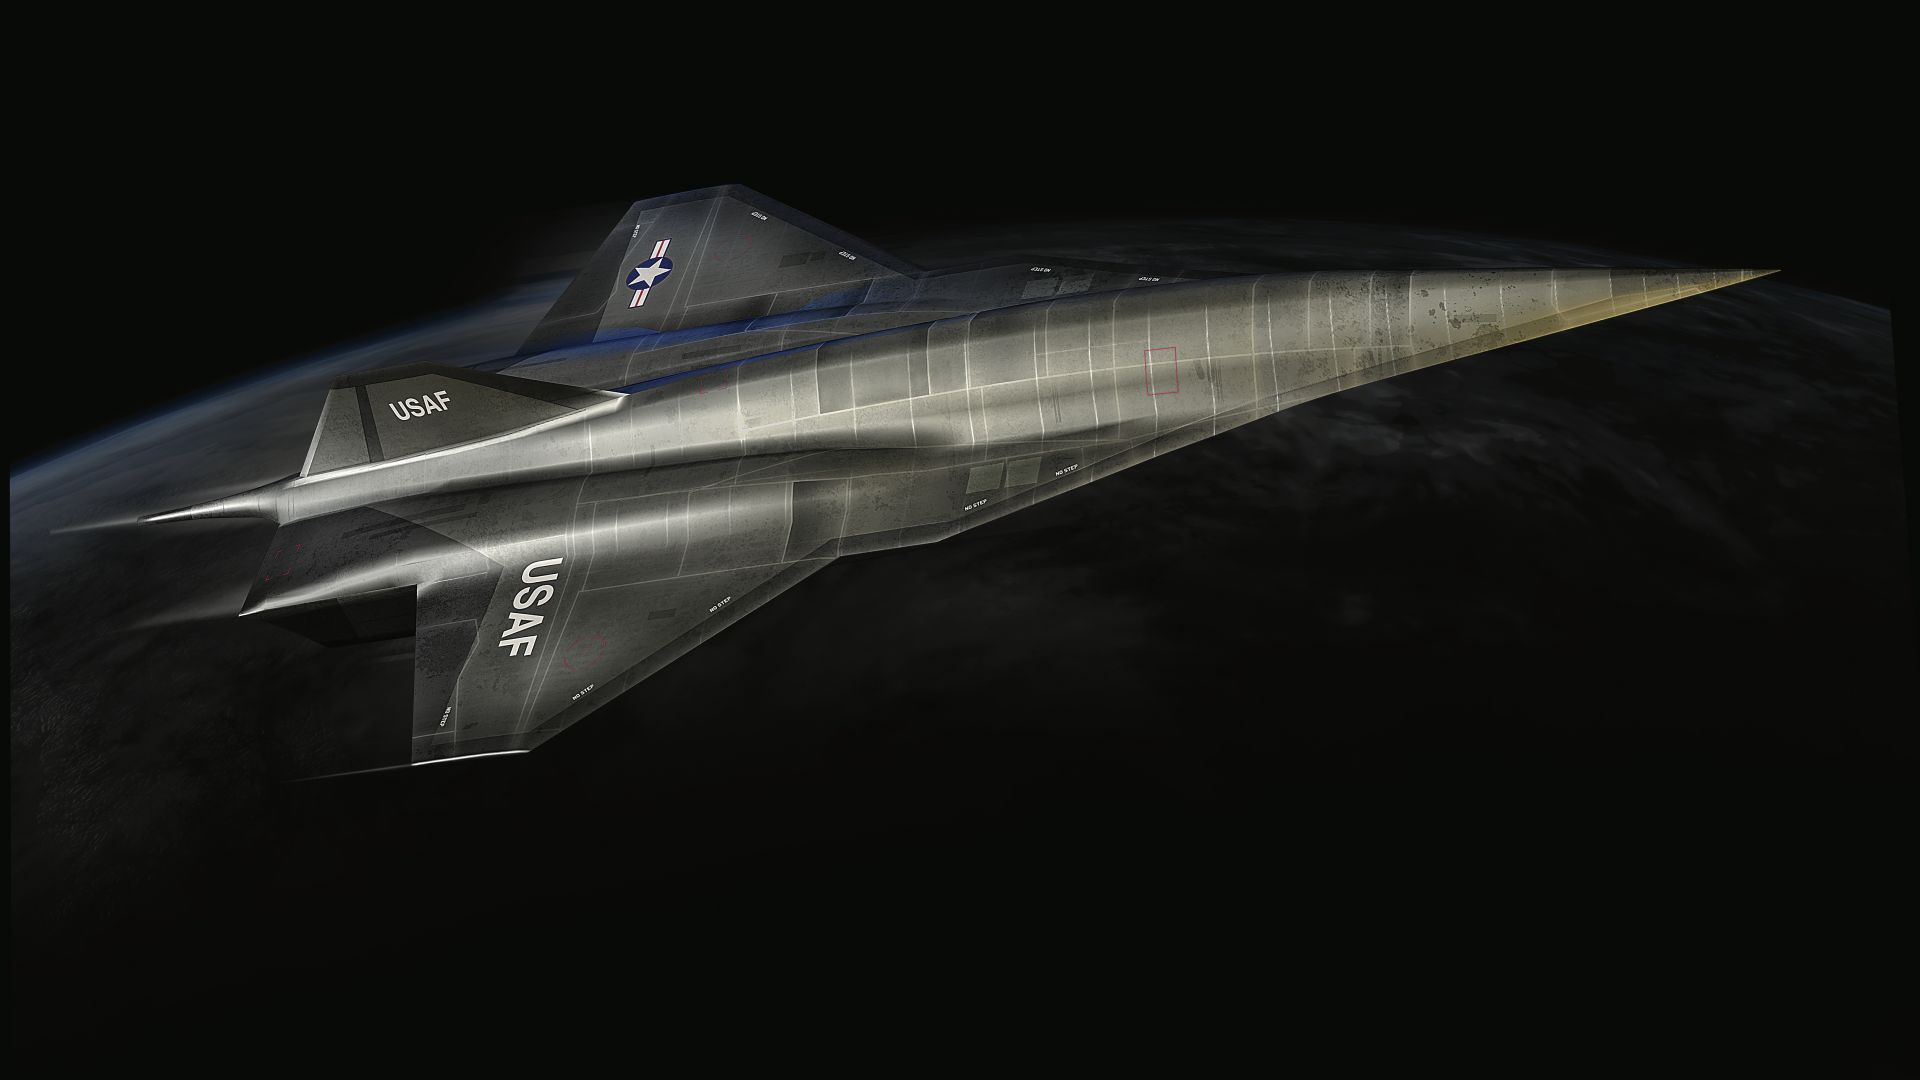 SR-72, Lockheed, Hypersonic Unmanned Reconnaissance Aircraft, Darpa, future aircraft, jet, plane, aircraft, U.S. Air Force (horizontal)